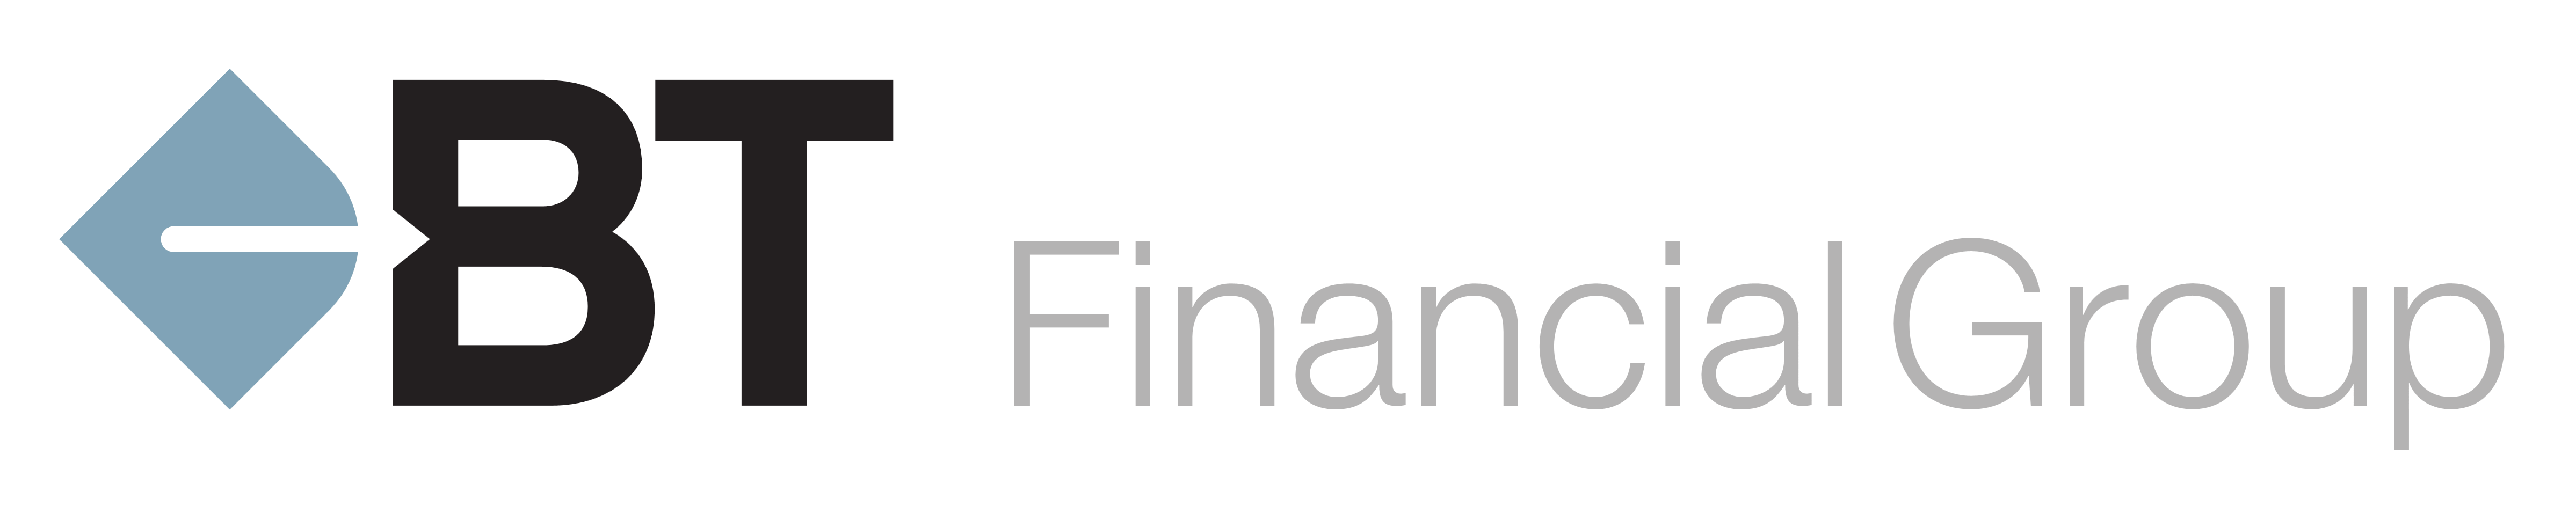 BT Financial Group Logos Download